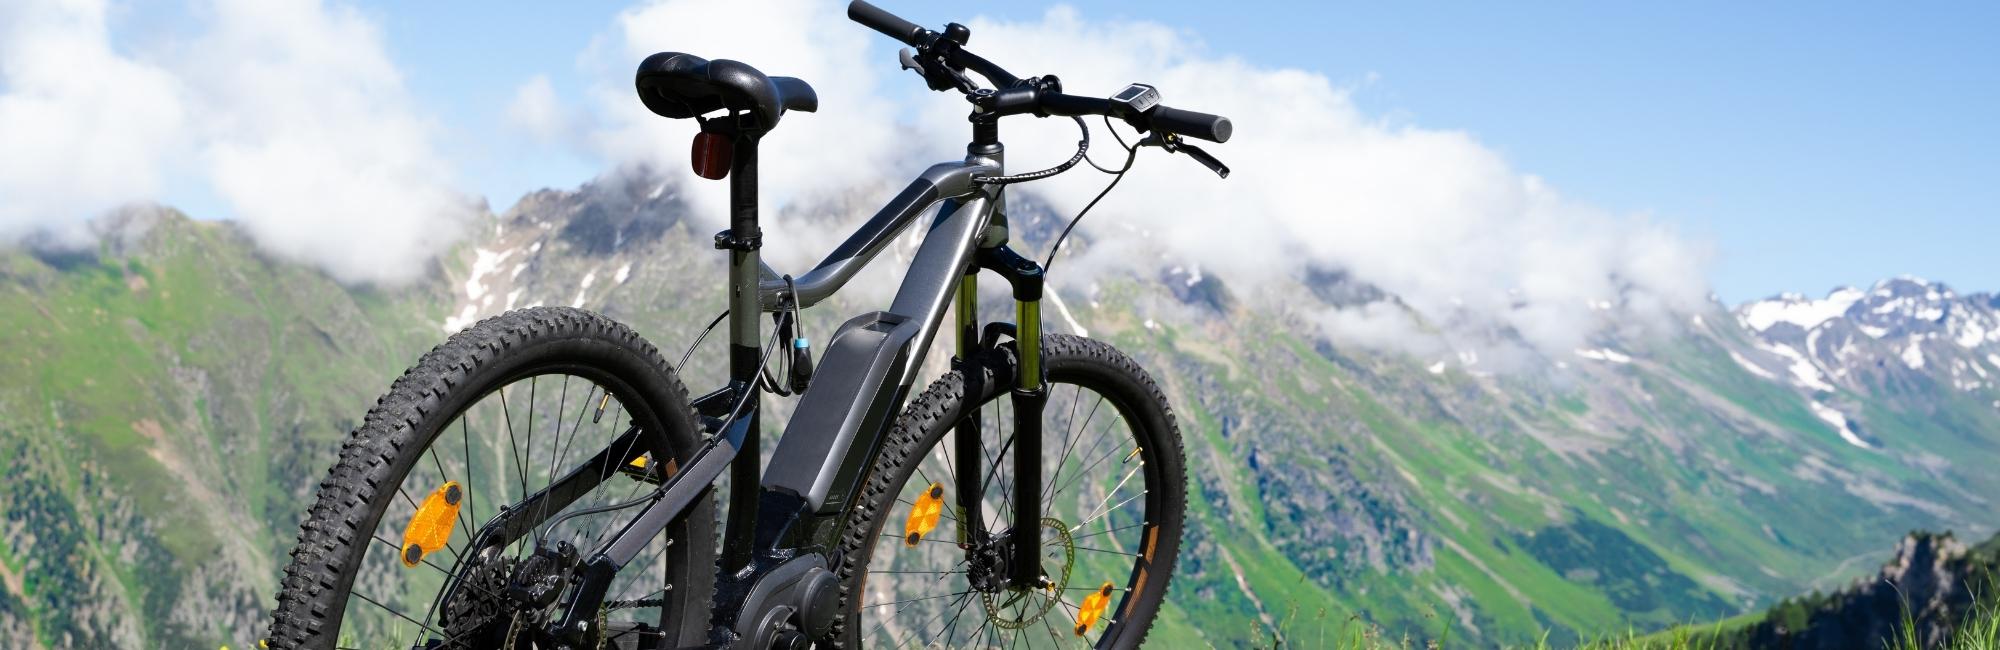 e-bike in a mountain landscape